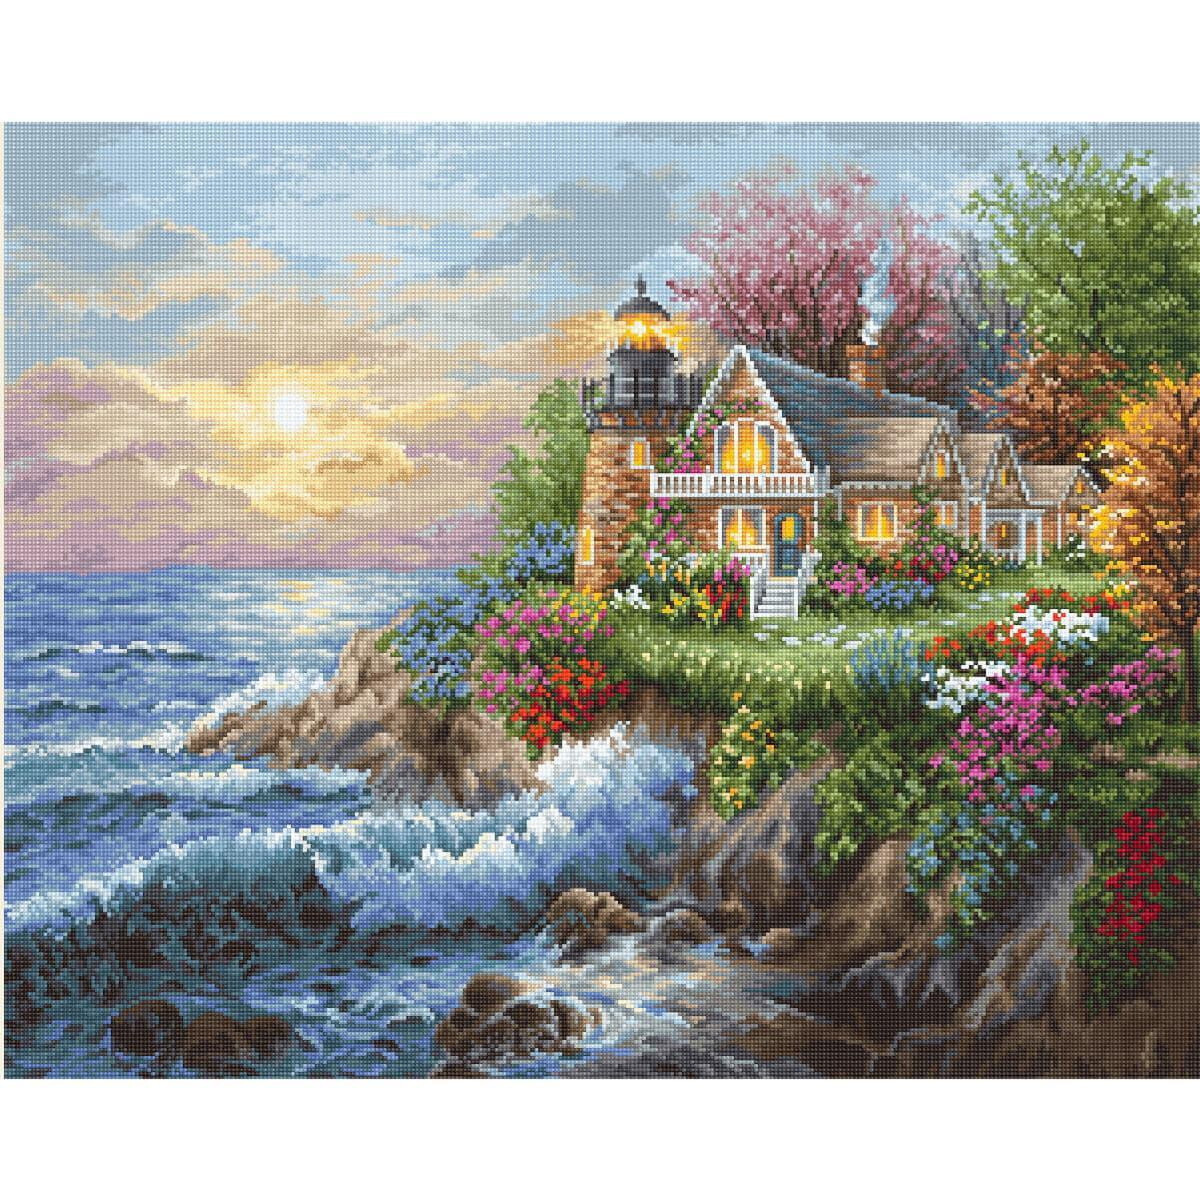 На картинке изображен маленький домик на берегу моря с...